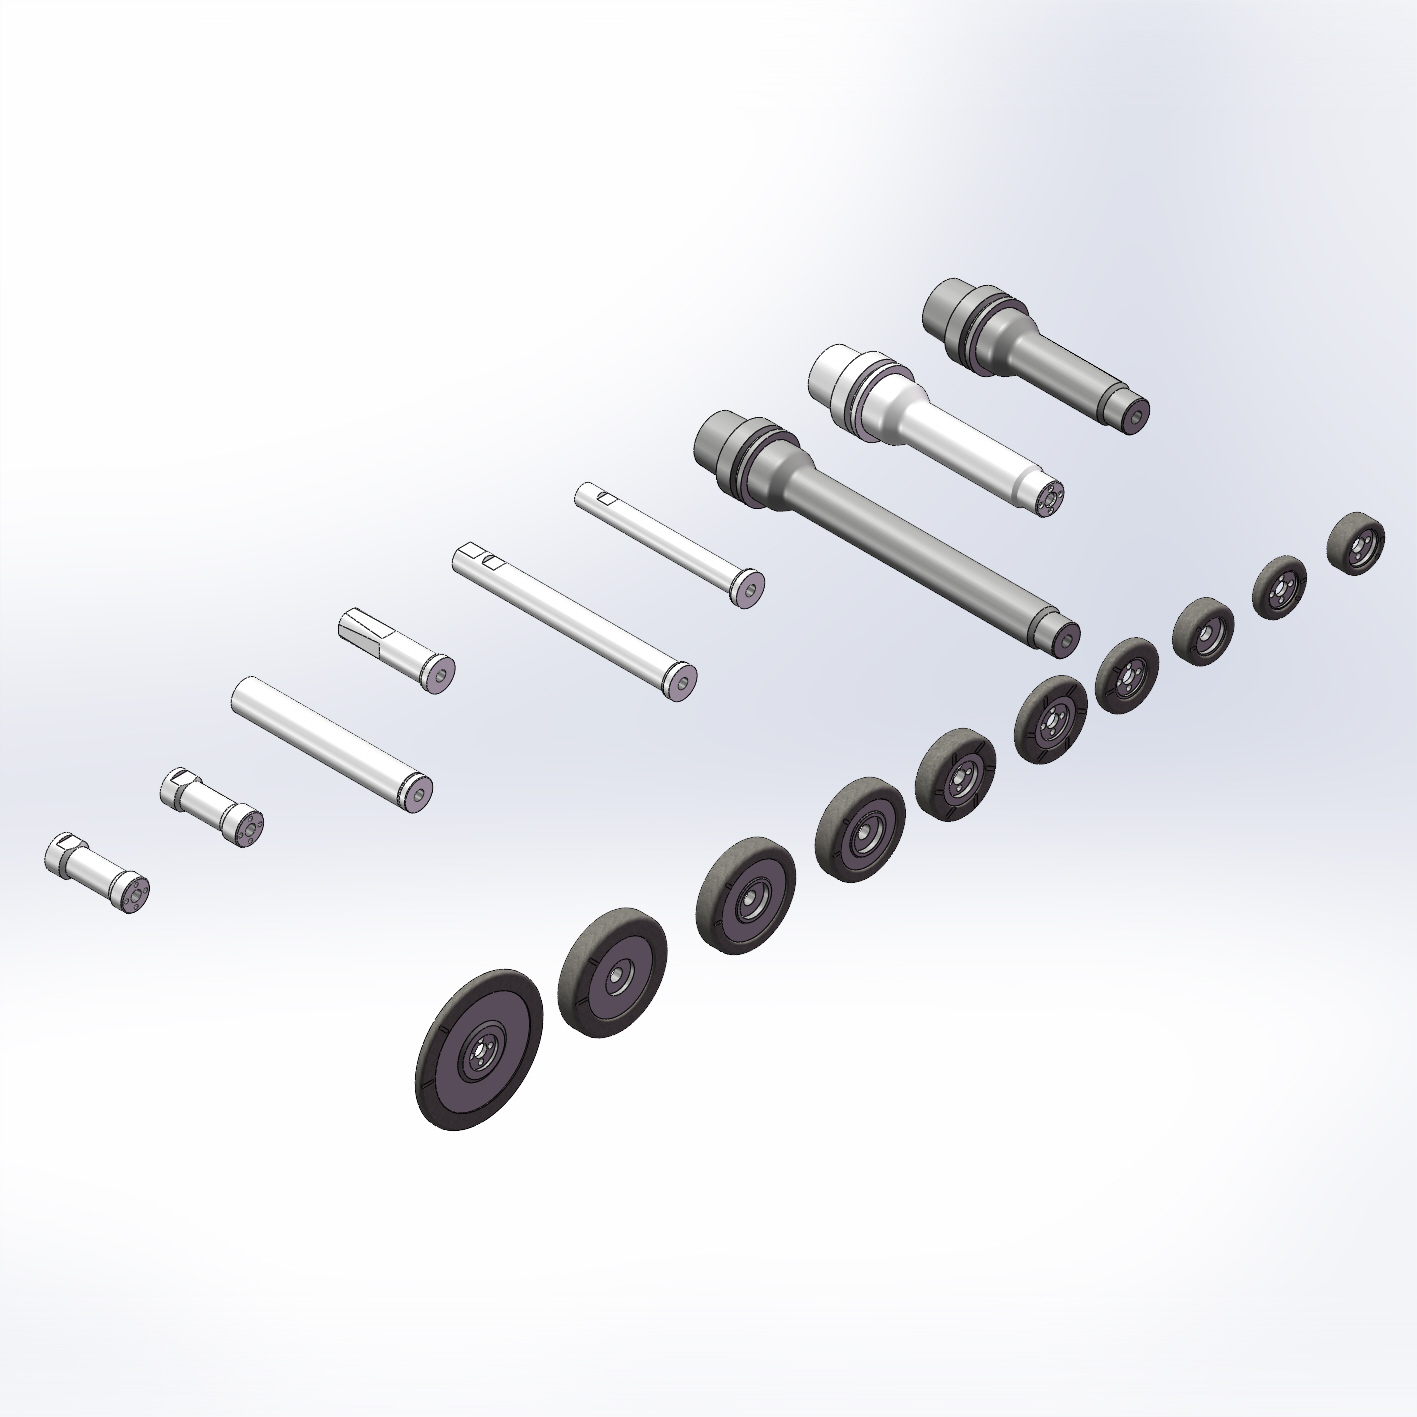 Standard D30 MUZZI fixing – tool holders and diamond wheels